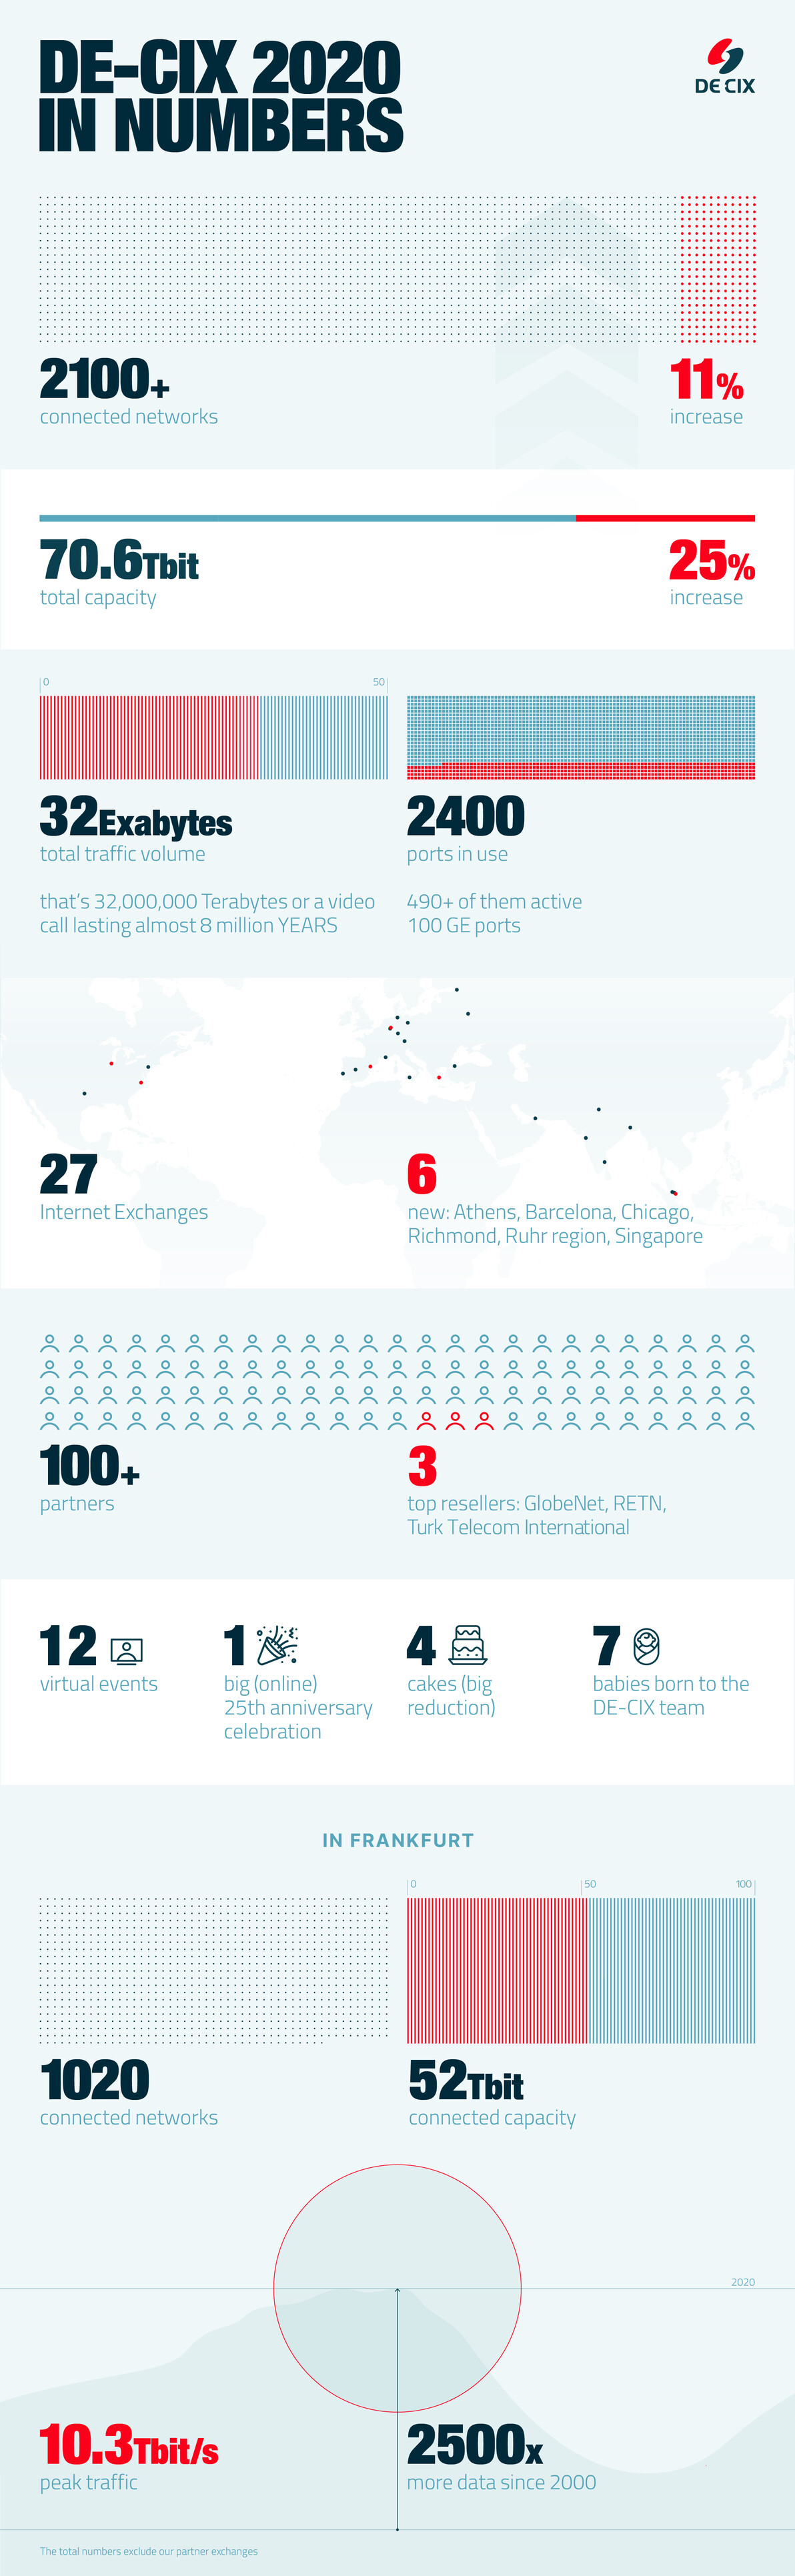 DE-CIX 2020 infographic